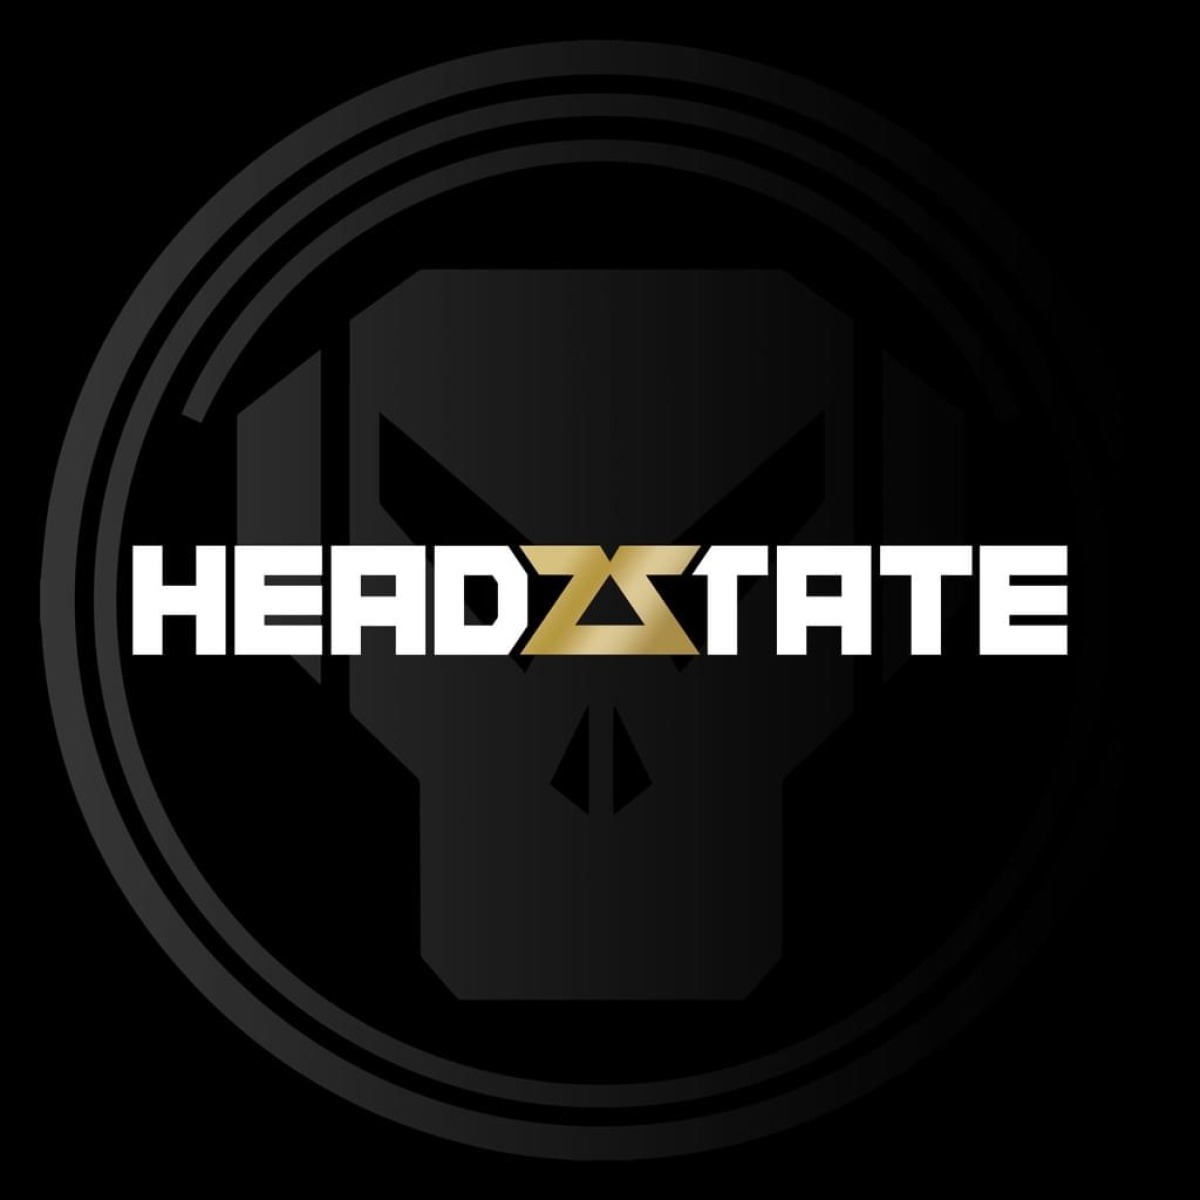 Metalheadz launches new non-d&b label, HeadzState